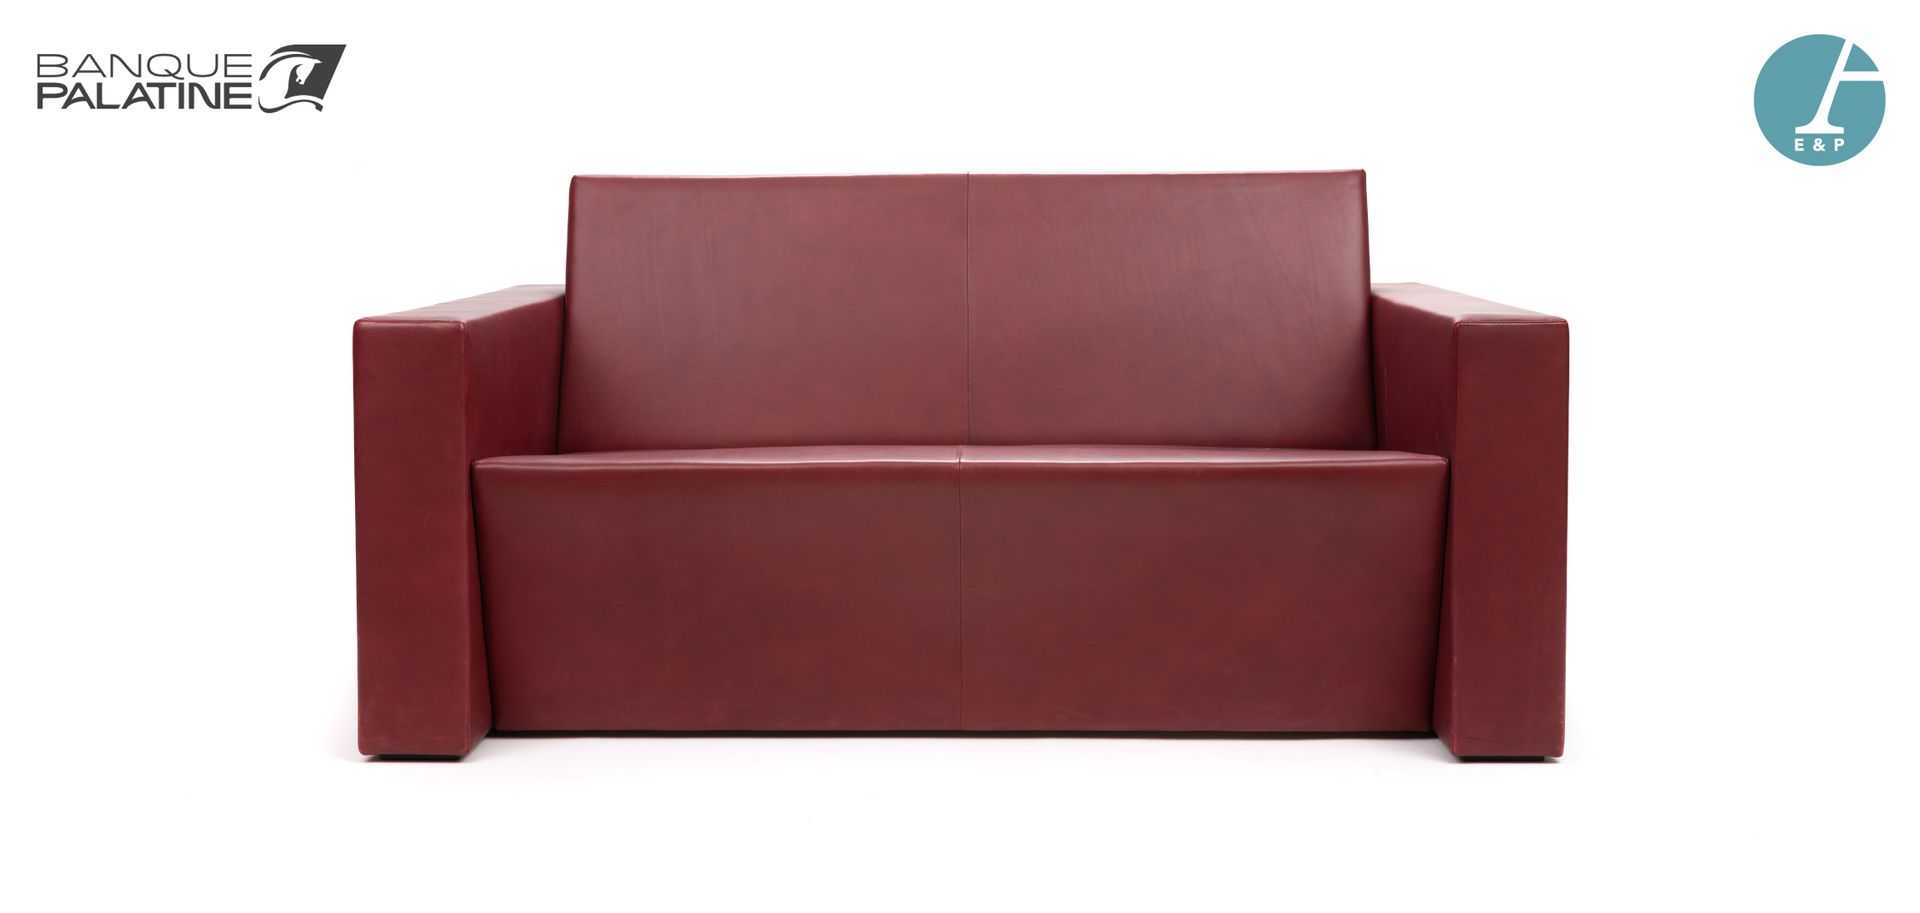 Null Matteo GRASSI，酒红色皮革的双座沙发。

刮伤。使用条件。

高：72厘米 - 宽：149厘米 - 深：91厘米